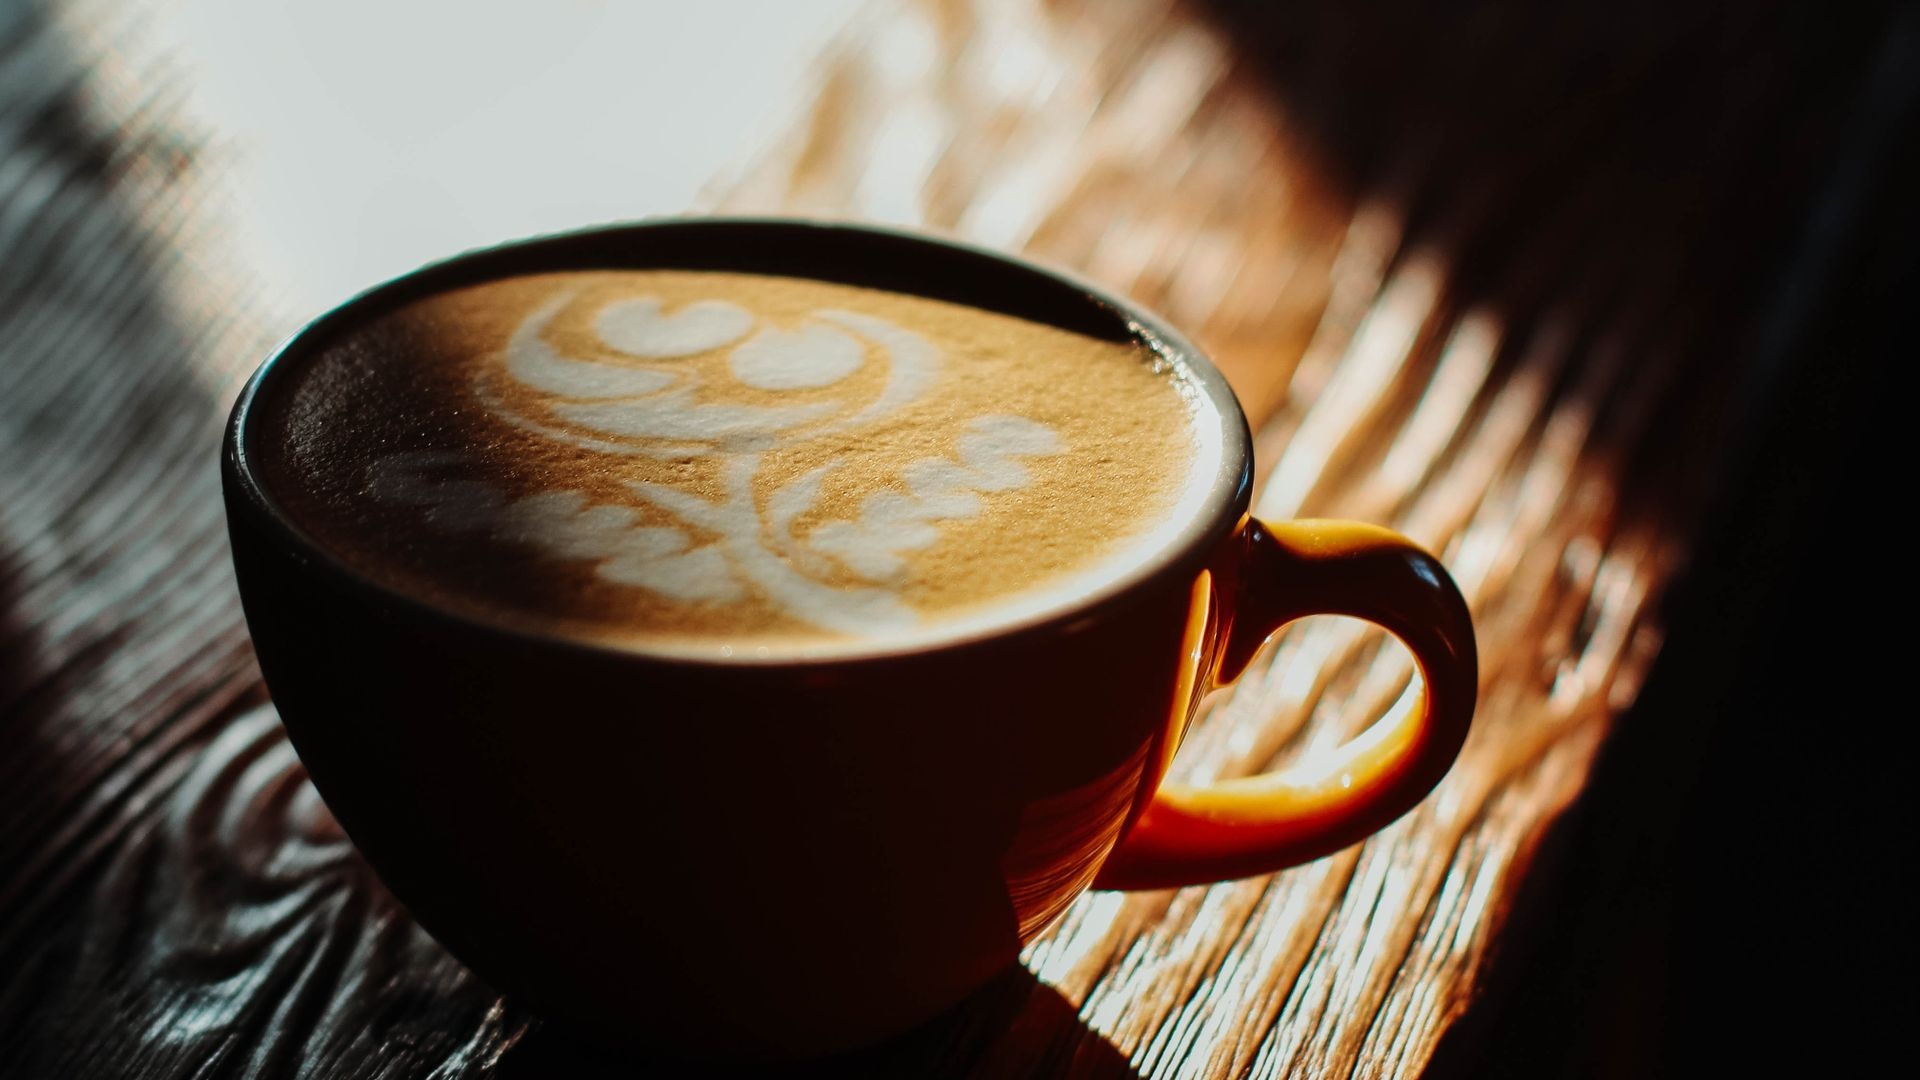 Artistic latte creations, Scenic cappuccino cups, HD coffee cup wallpaper, Coffee art appreciation, 1920x1080 Full HD Desktop